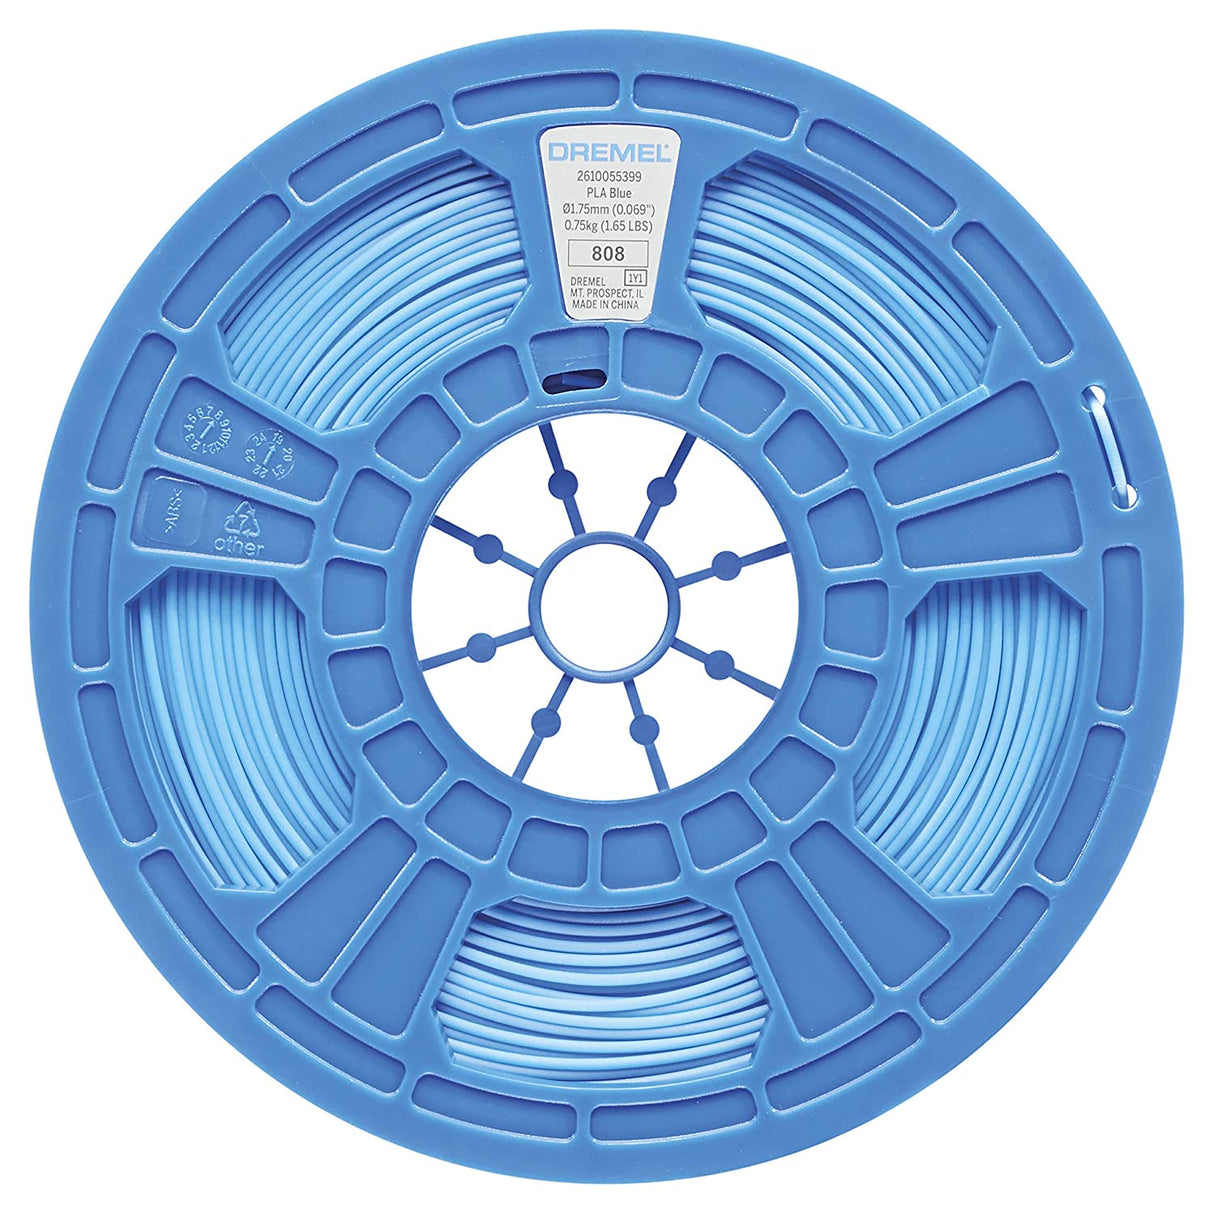 Dremel DigiLab PLA-BLU-01 3D Printer Filament, 1.75 mm Diameter, 0.75 kg Spool Weight, Color Blue, RFID Enabled, New Formula and 50 Percent More per Spool